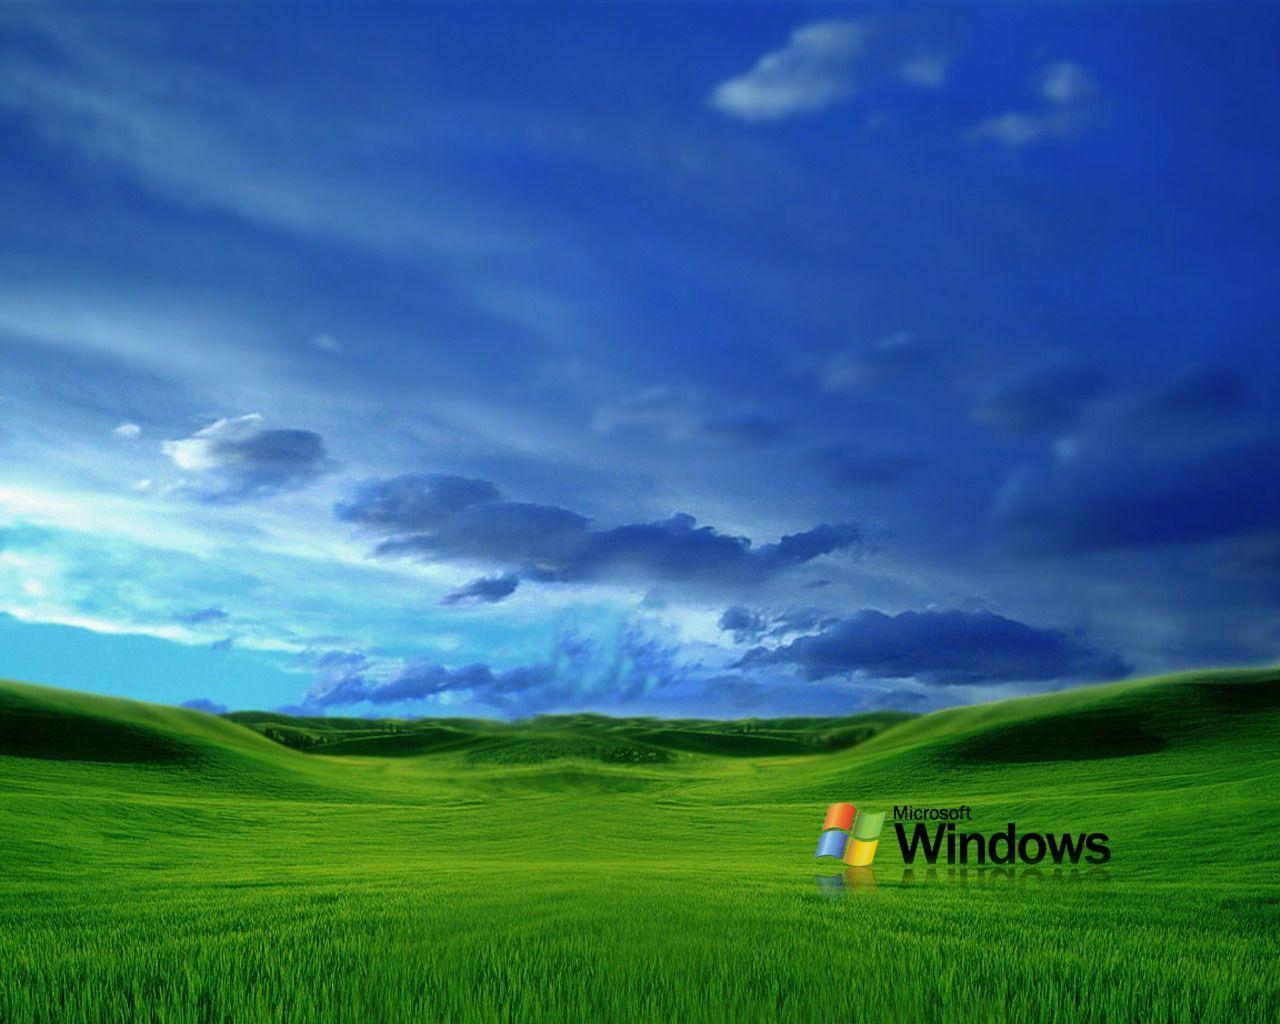 The pride of Windows desktop